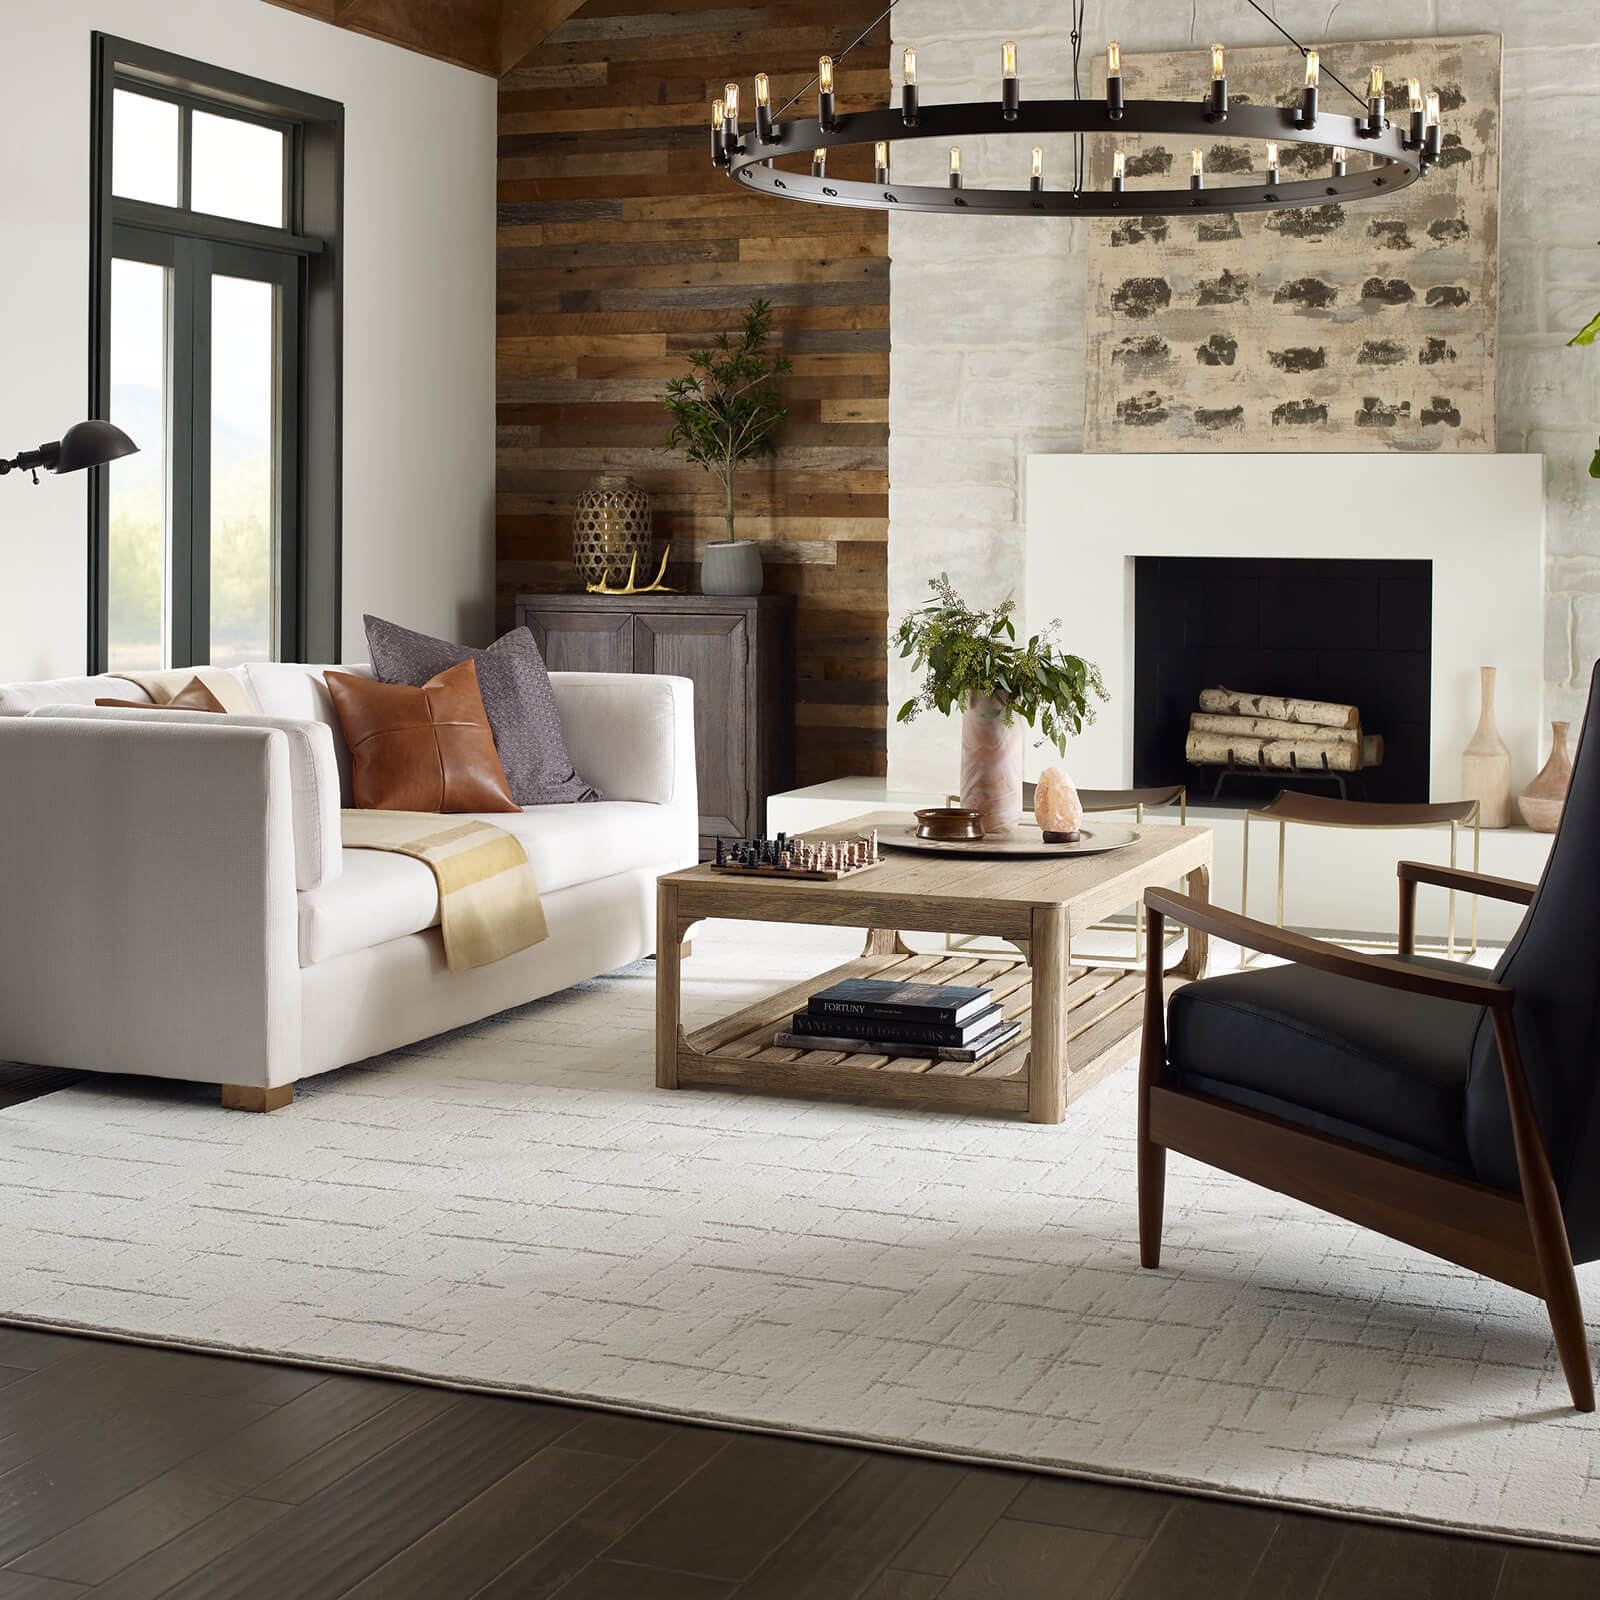 Hardwood flooring in living room | Haley's Flooring & Interiors